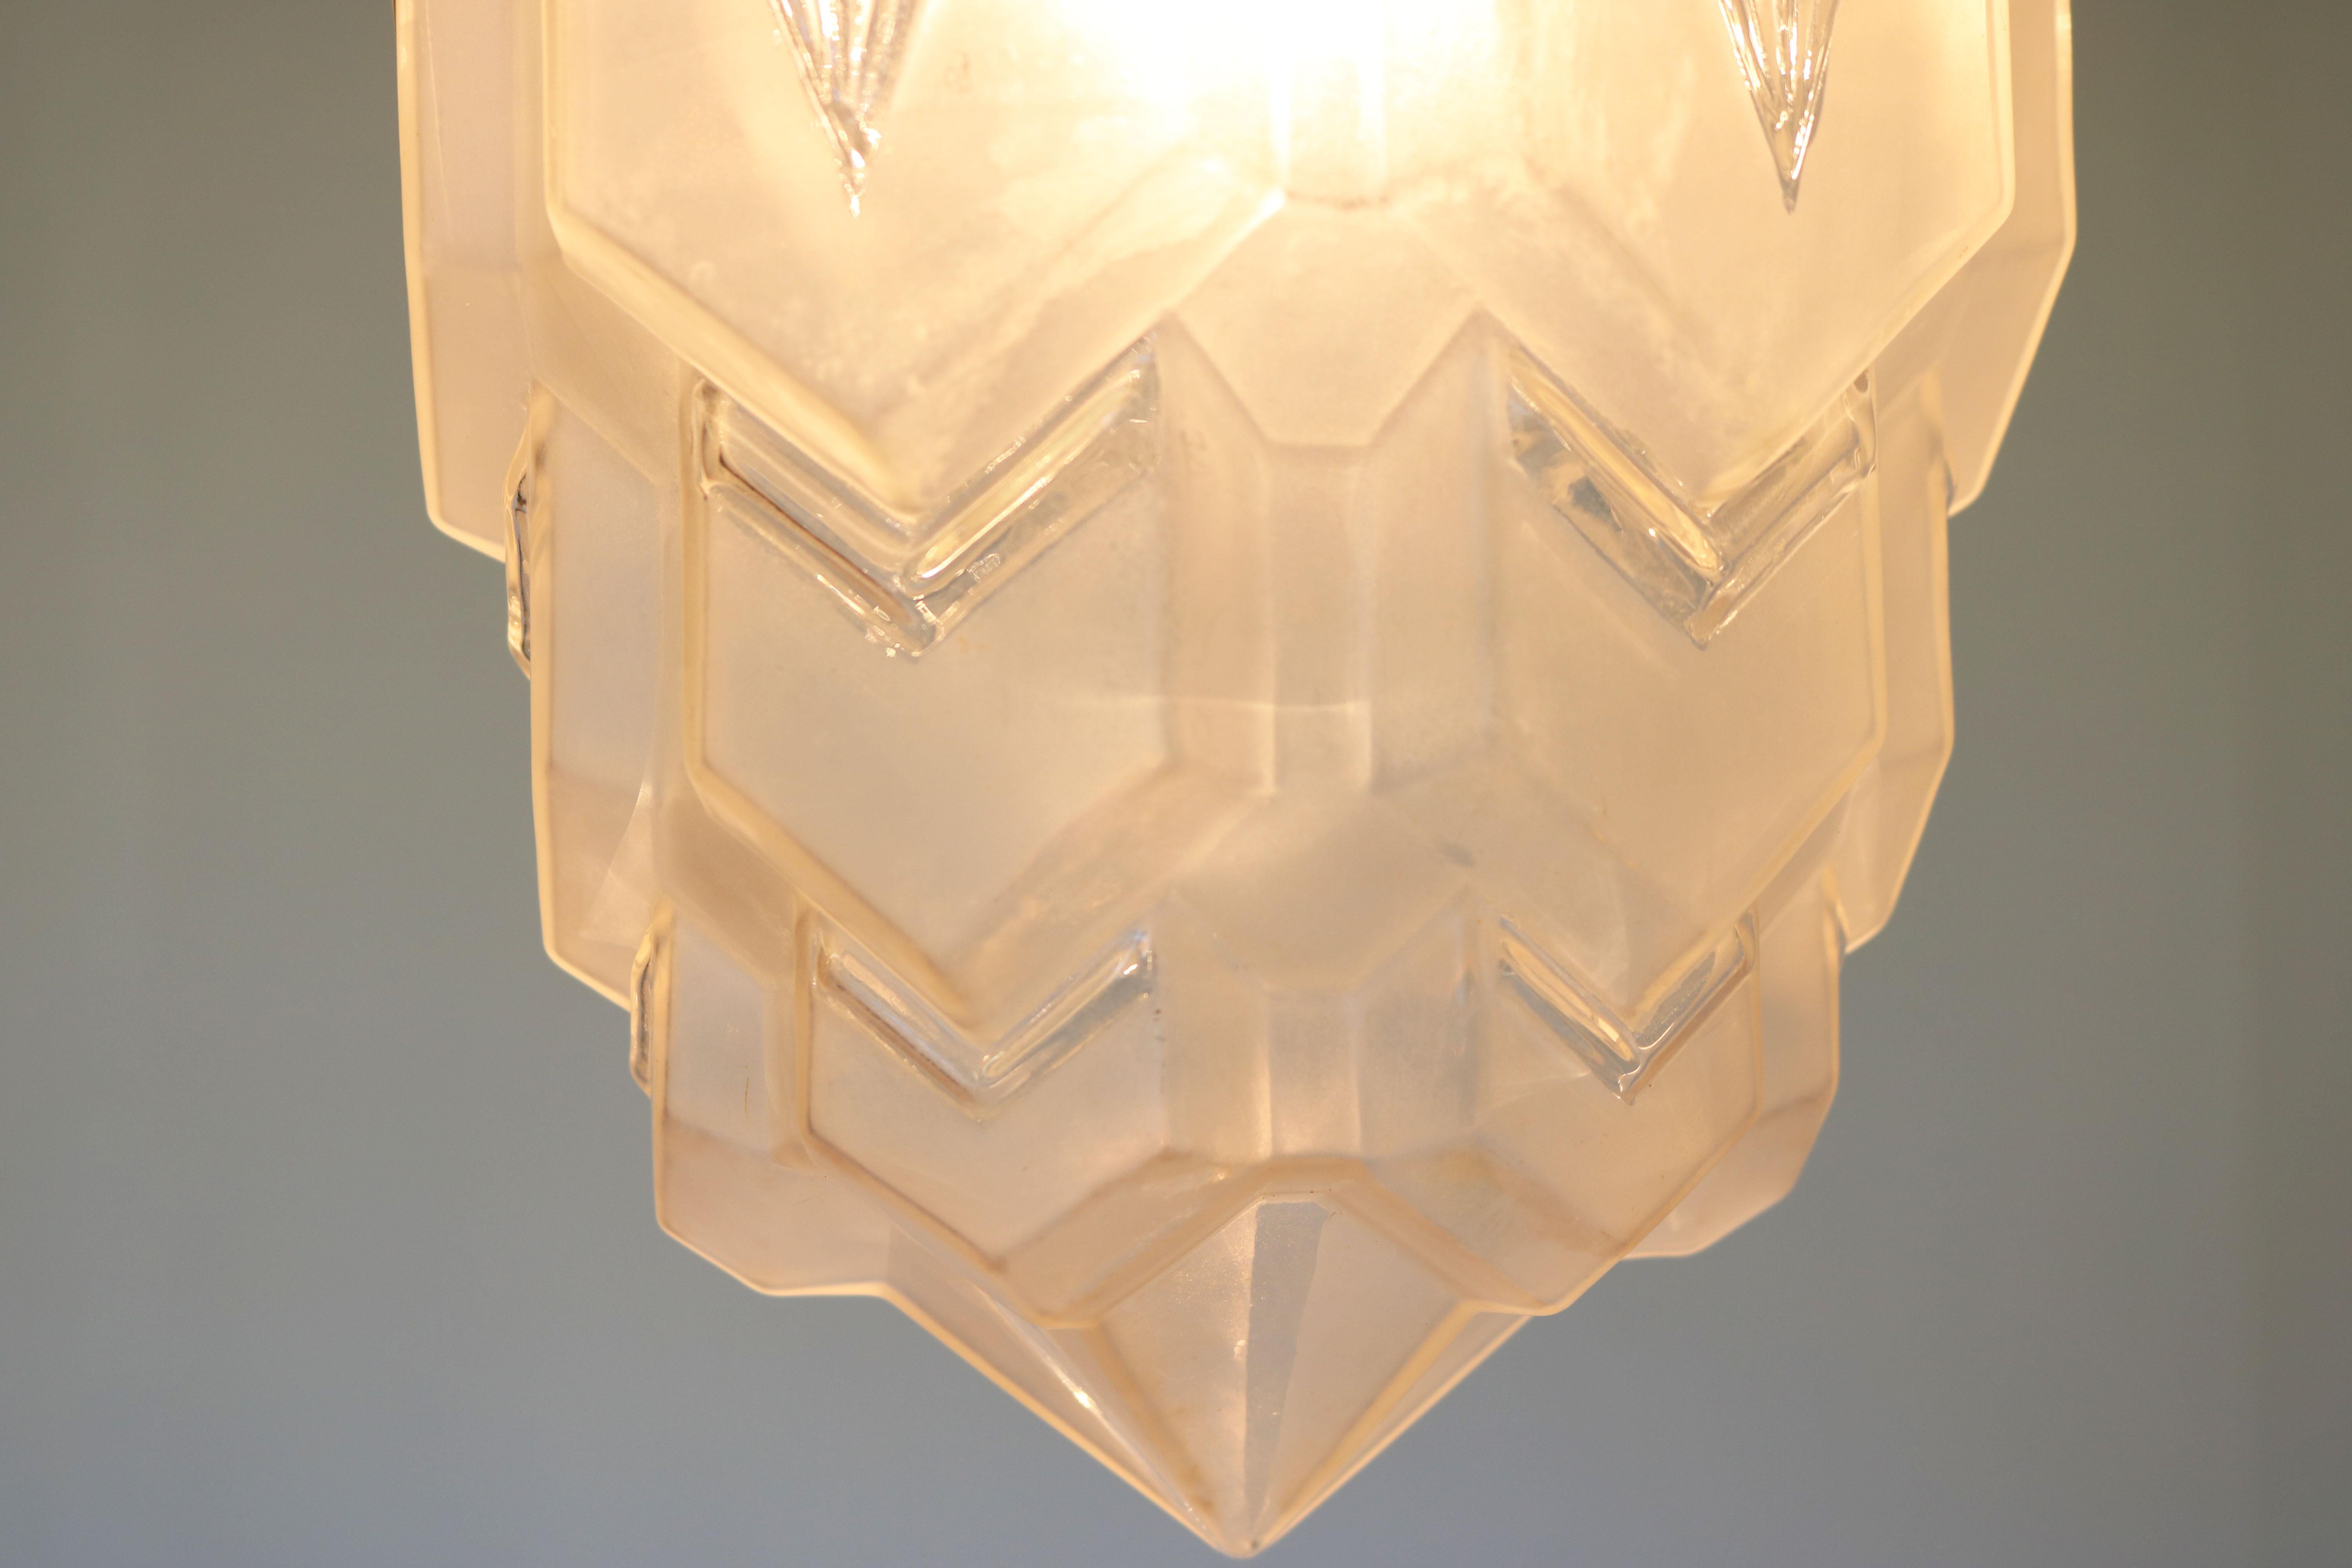 French Antique Art Deco Skyscraper Pendant Light / Lamp 1920 Bauhaus Style Glass